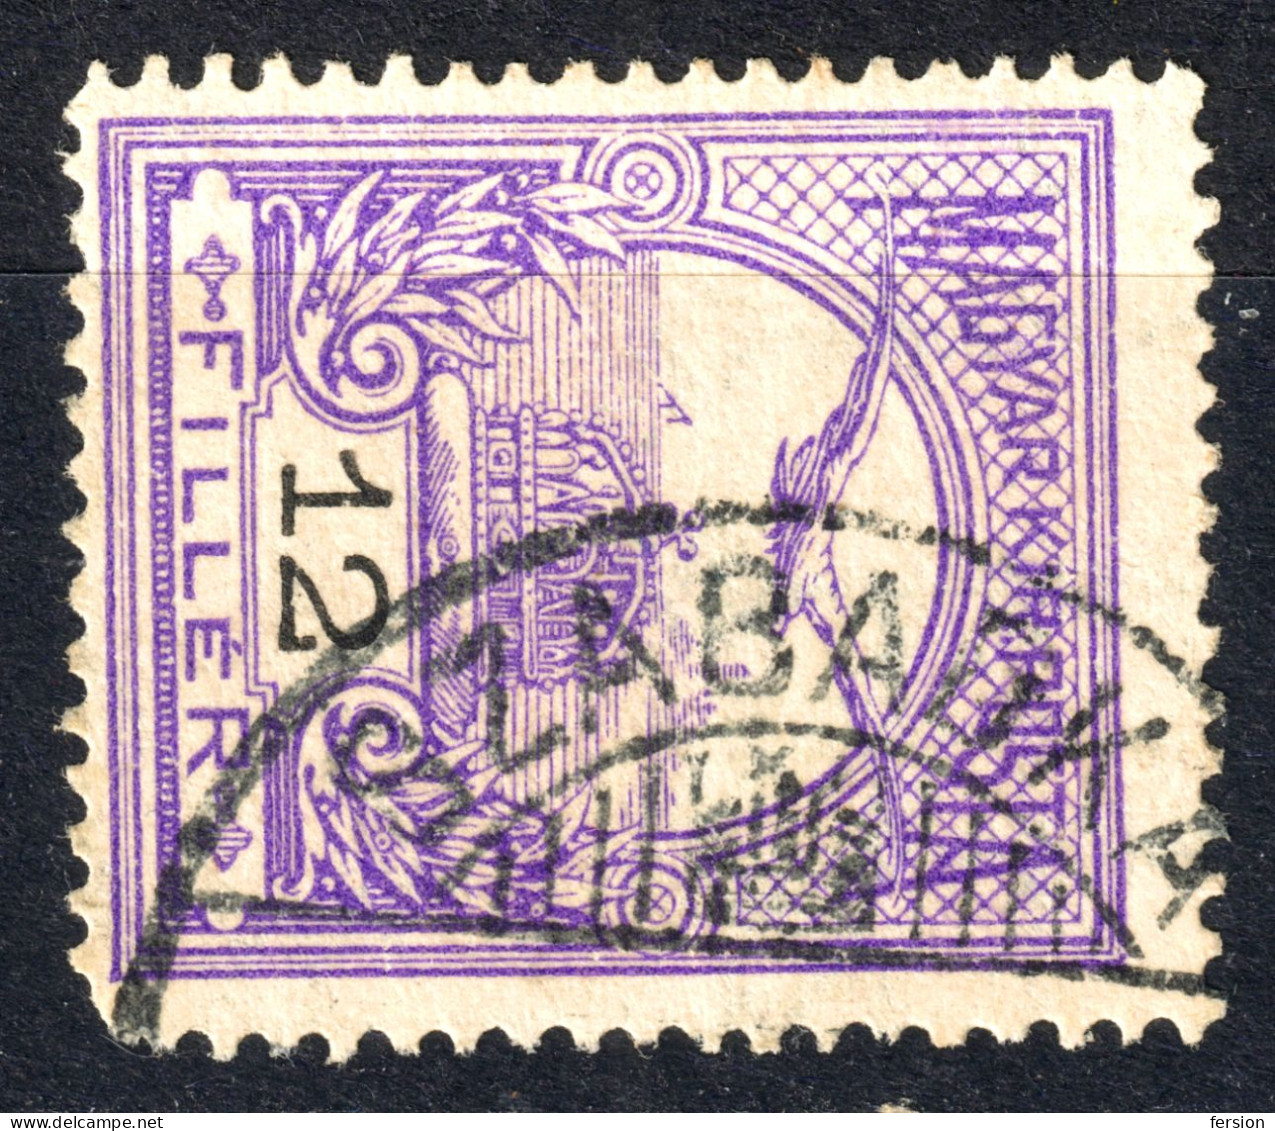 SZABADKA Subotica Postmark TURUL Crown 1910's Hungary SERBIA Vojvodina Bačka BÁCS BODROG County KuK - 12 Fill - Vorphilatelie